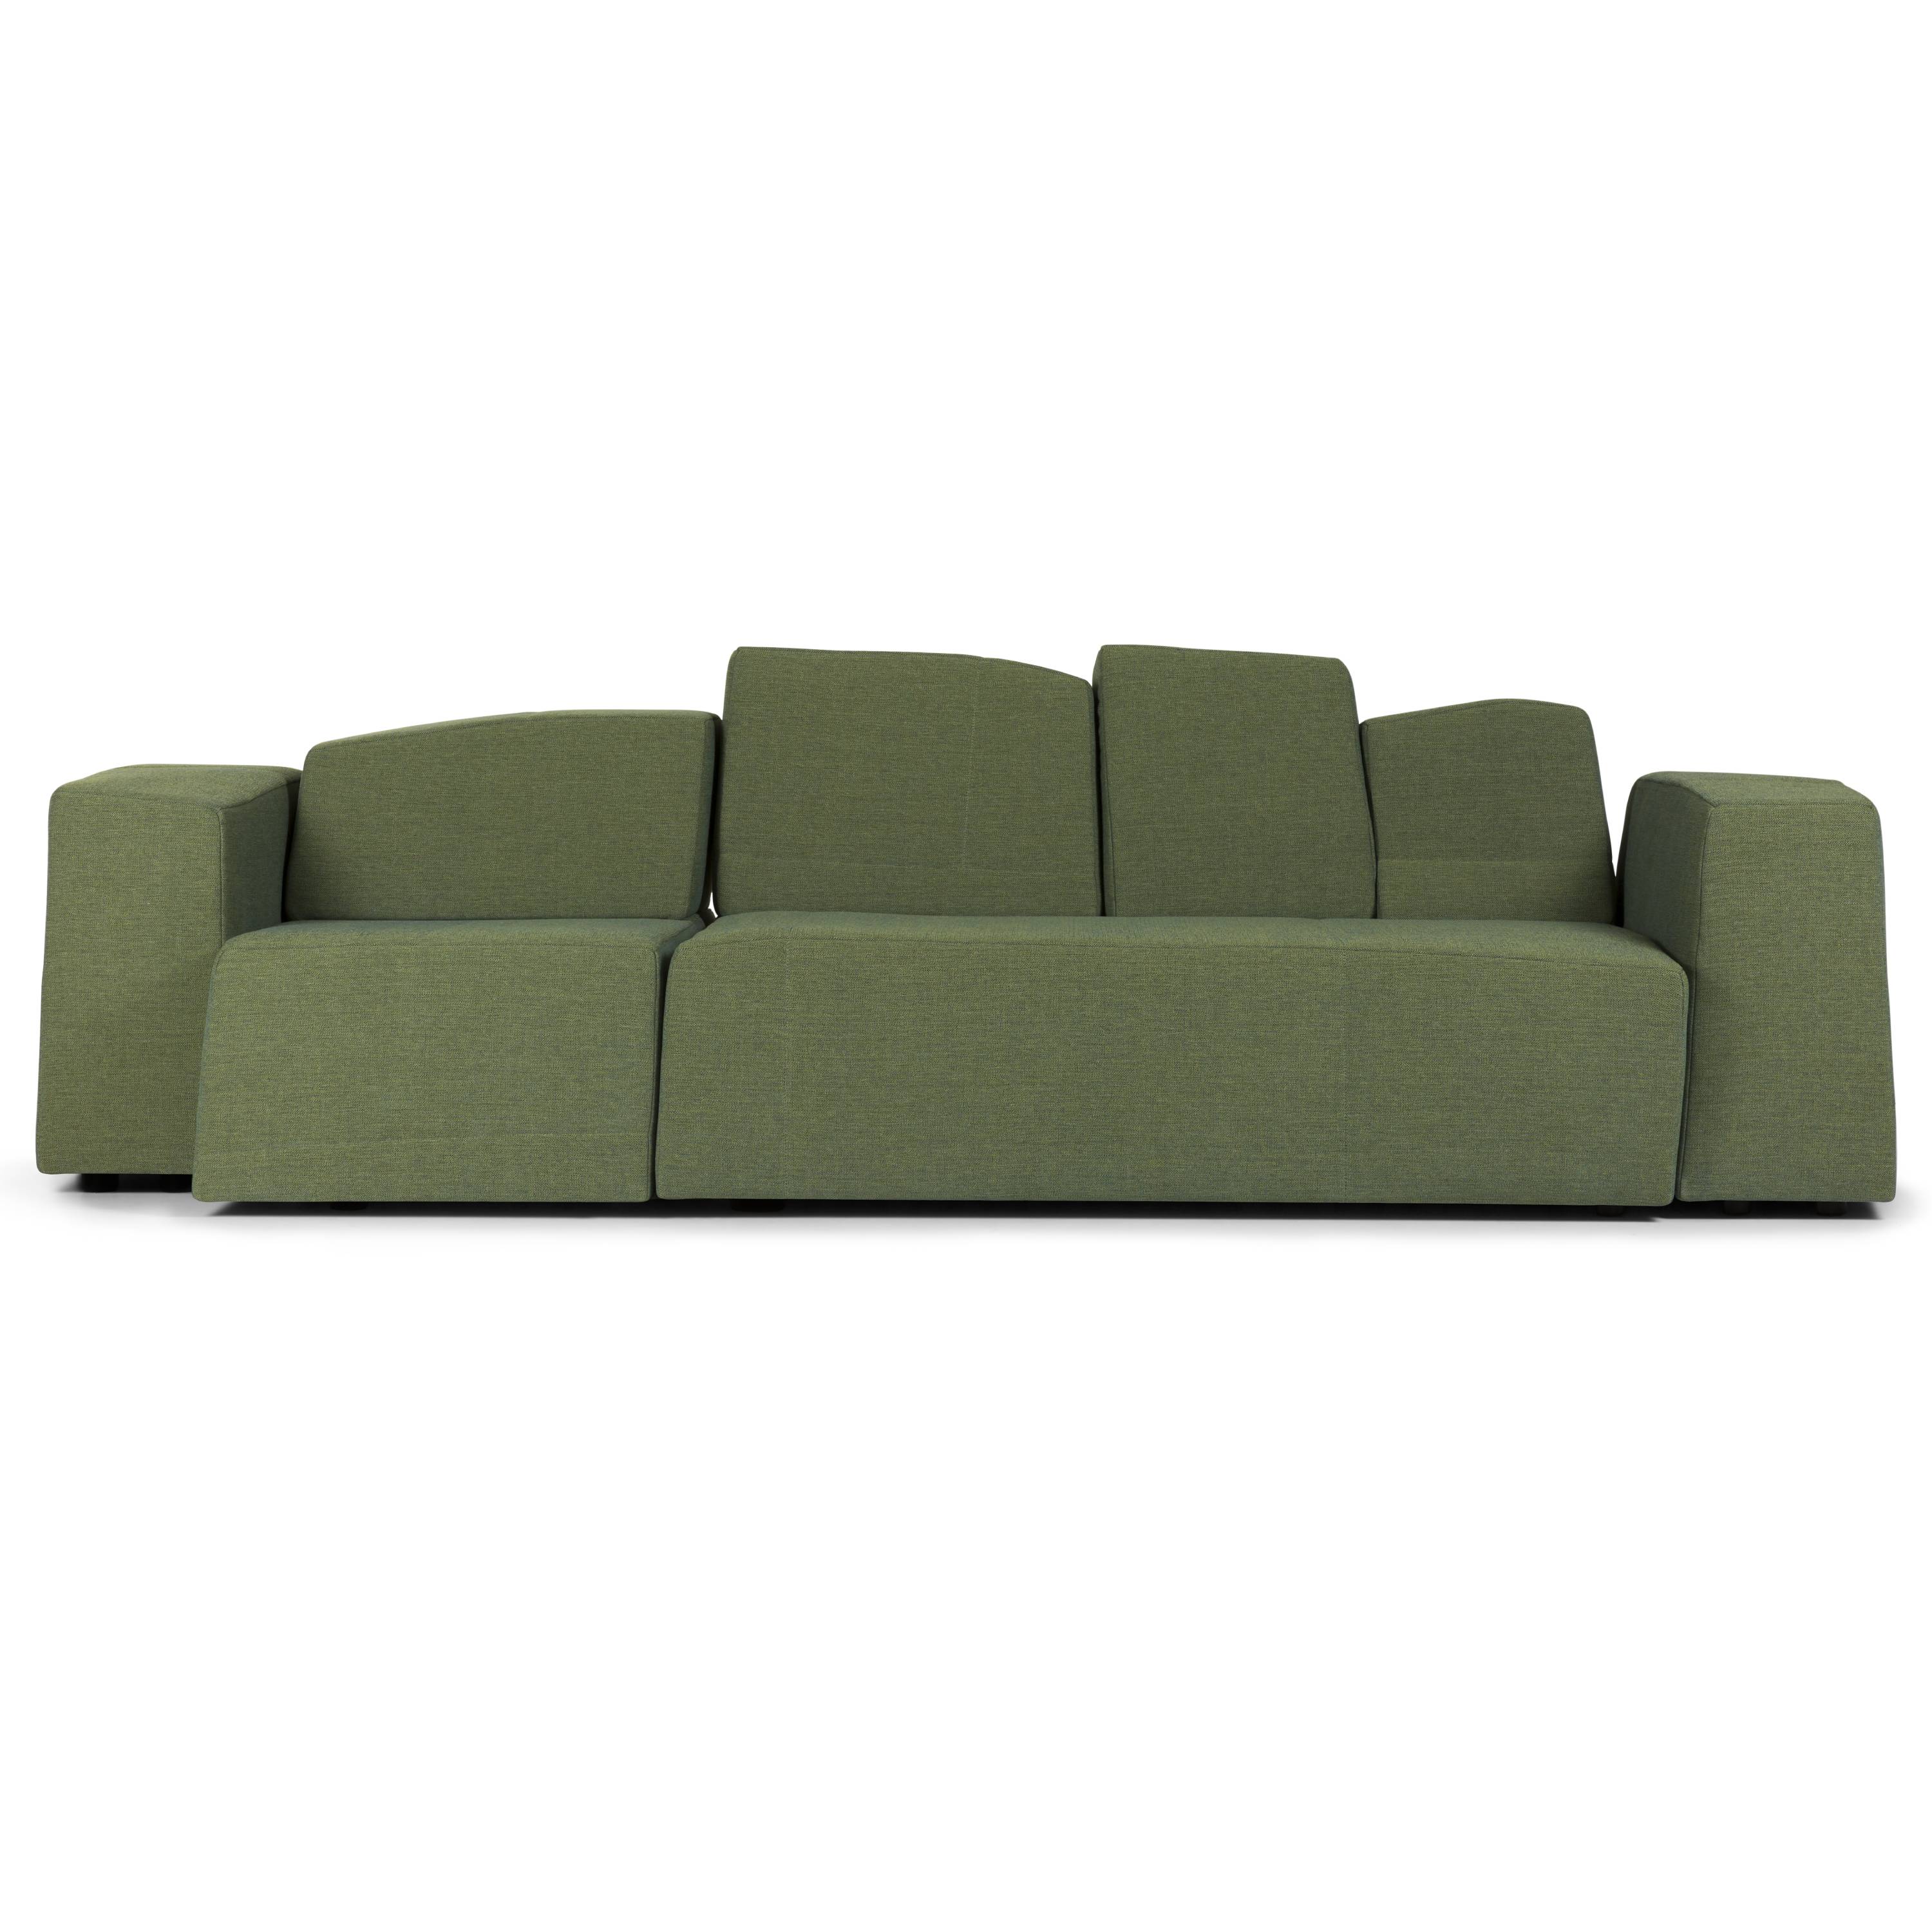 SLT Modular Sofa: Triple Seater